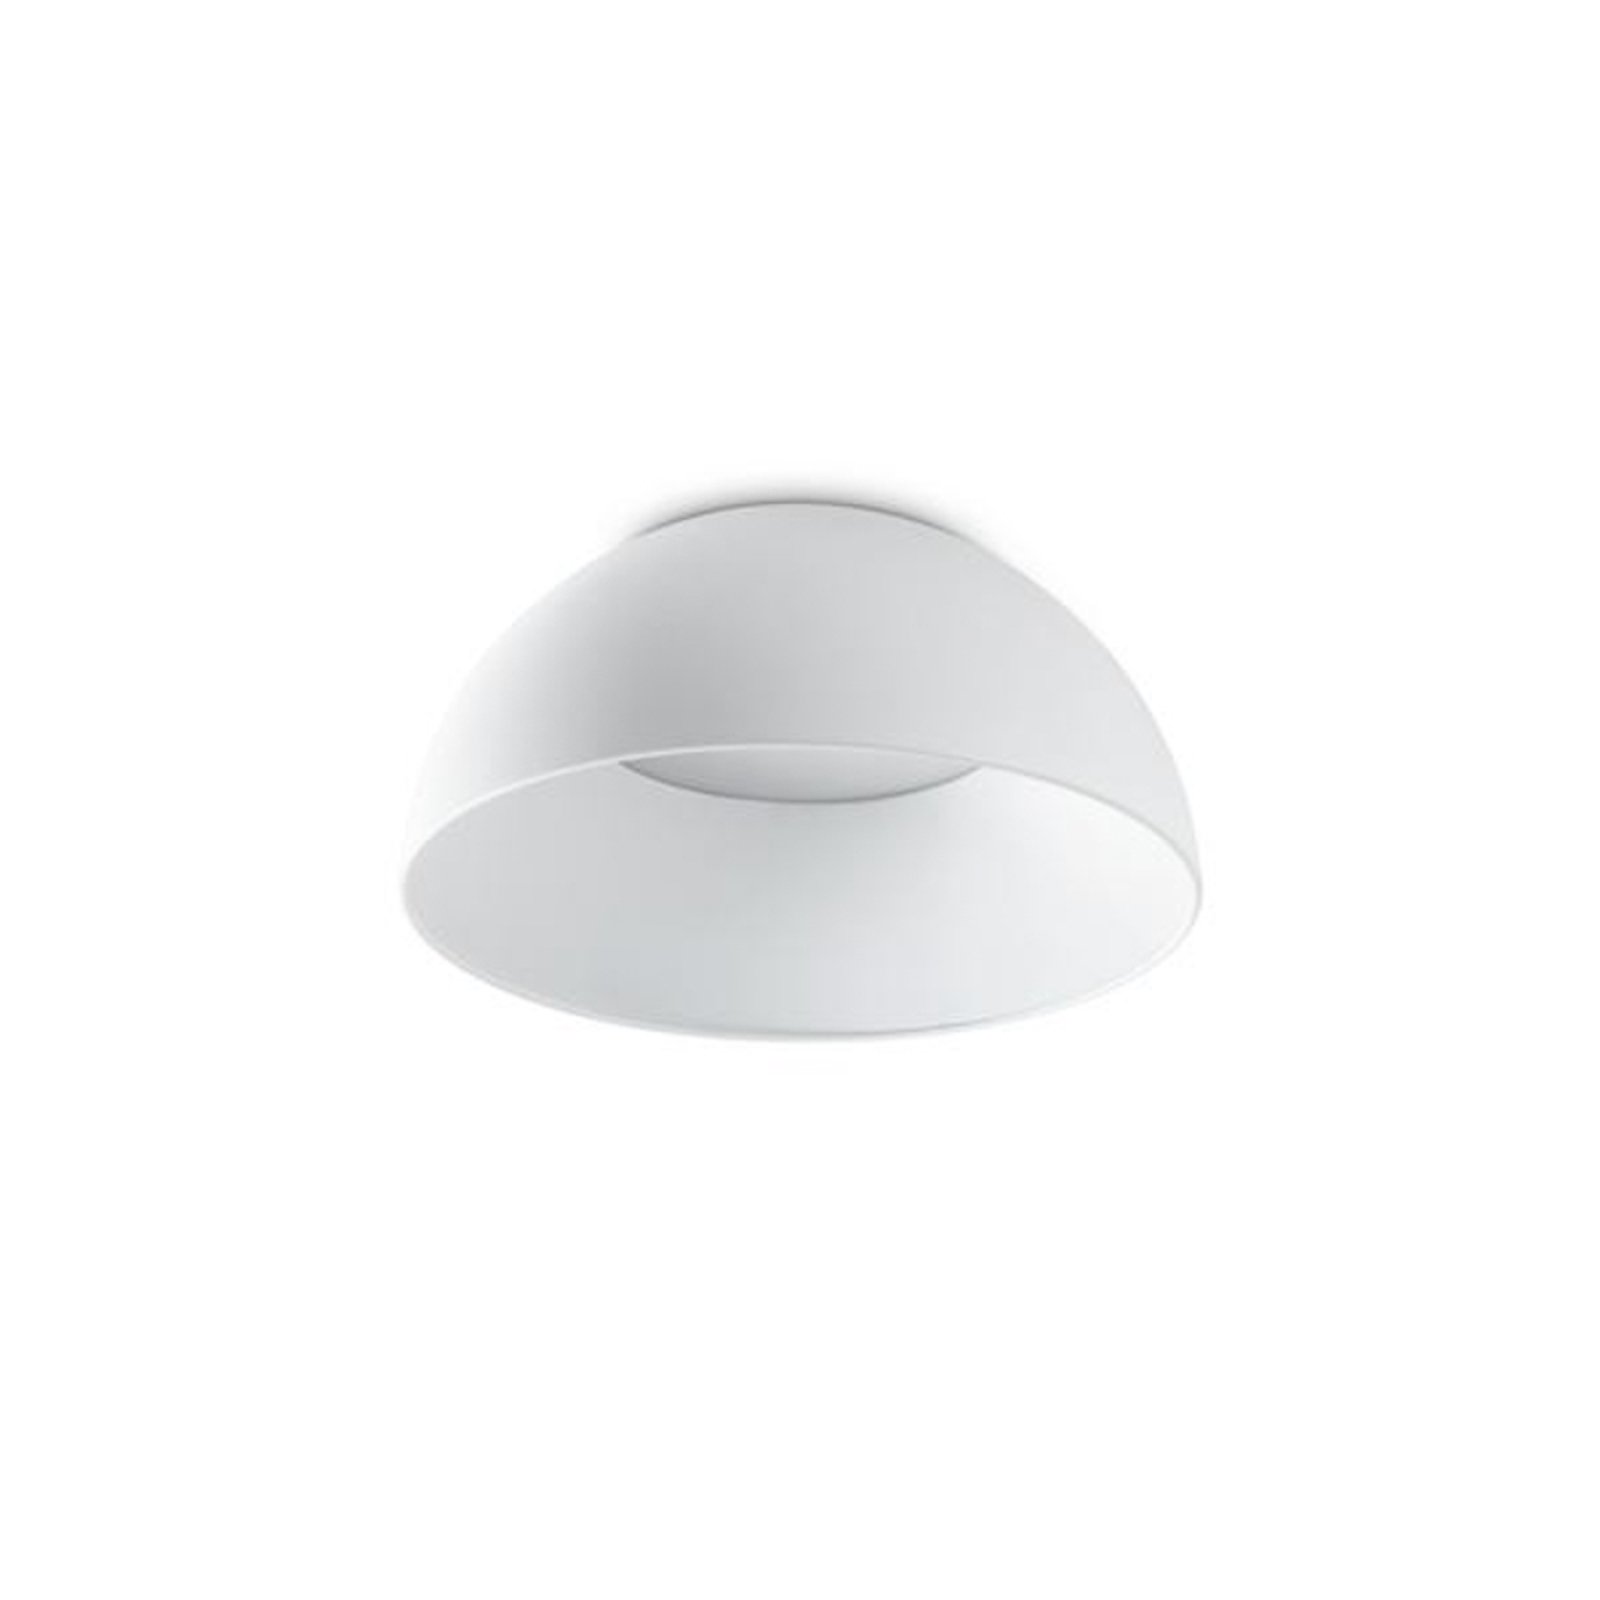 Ideal Lux LED plafondlamp Corolla-1, wit, metaal, Ø 35 cm